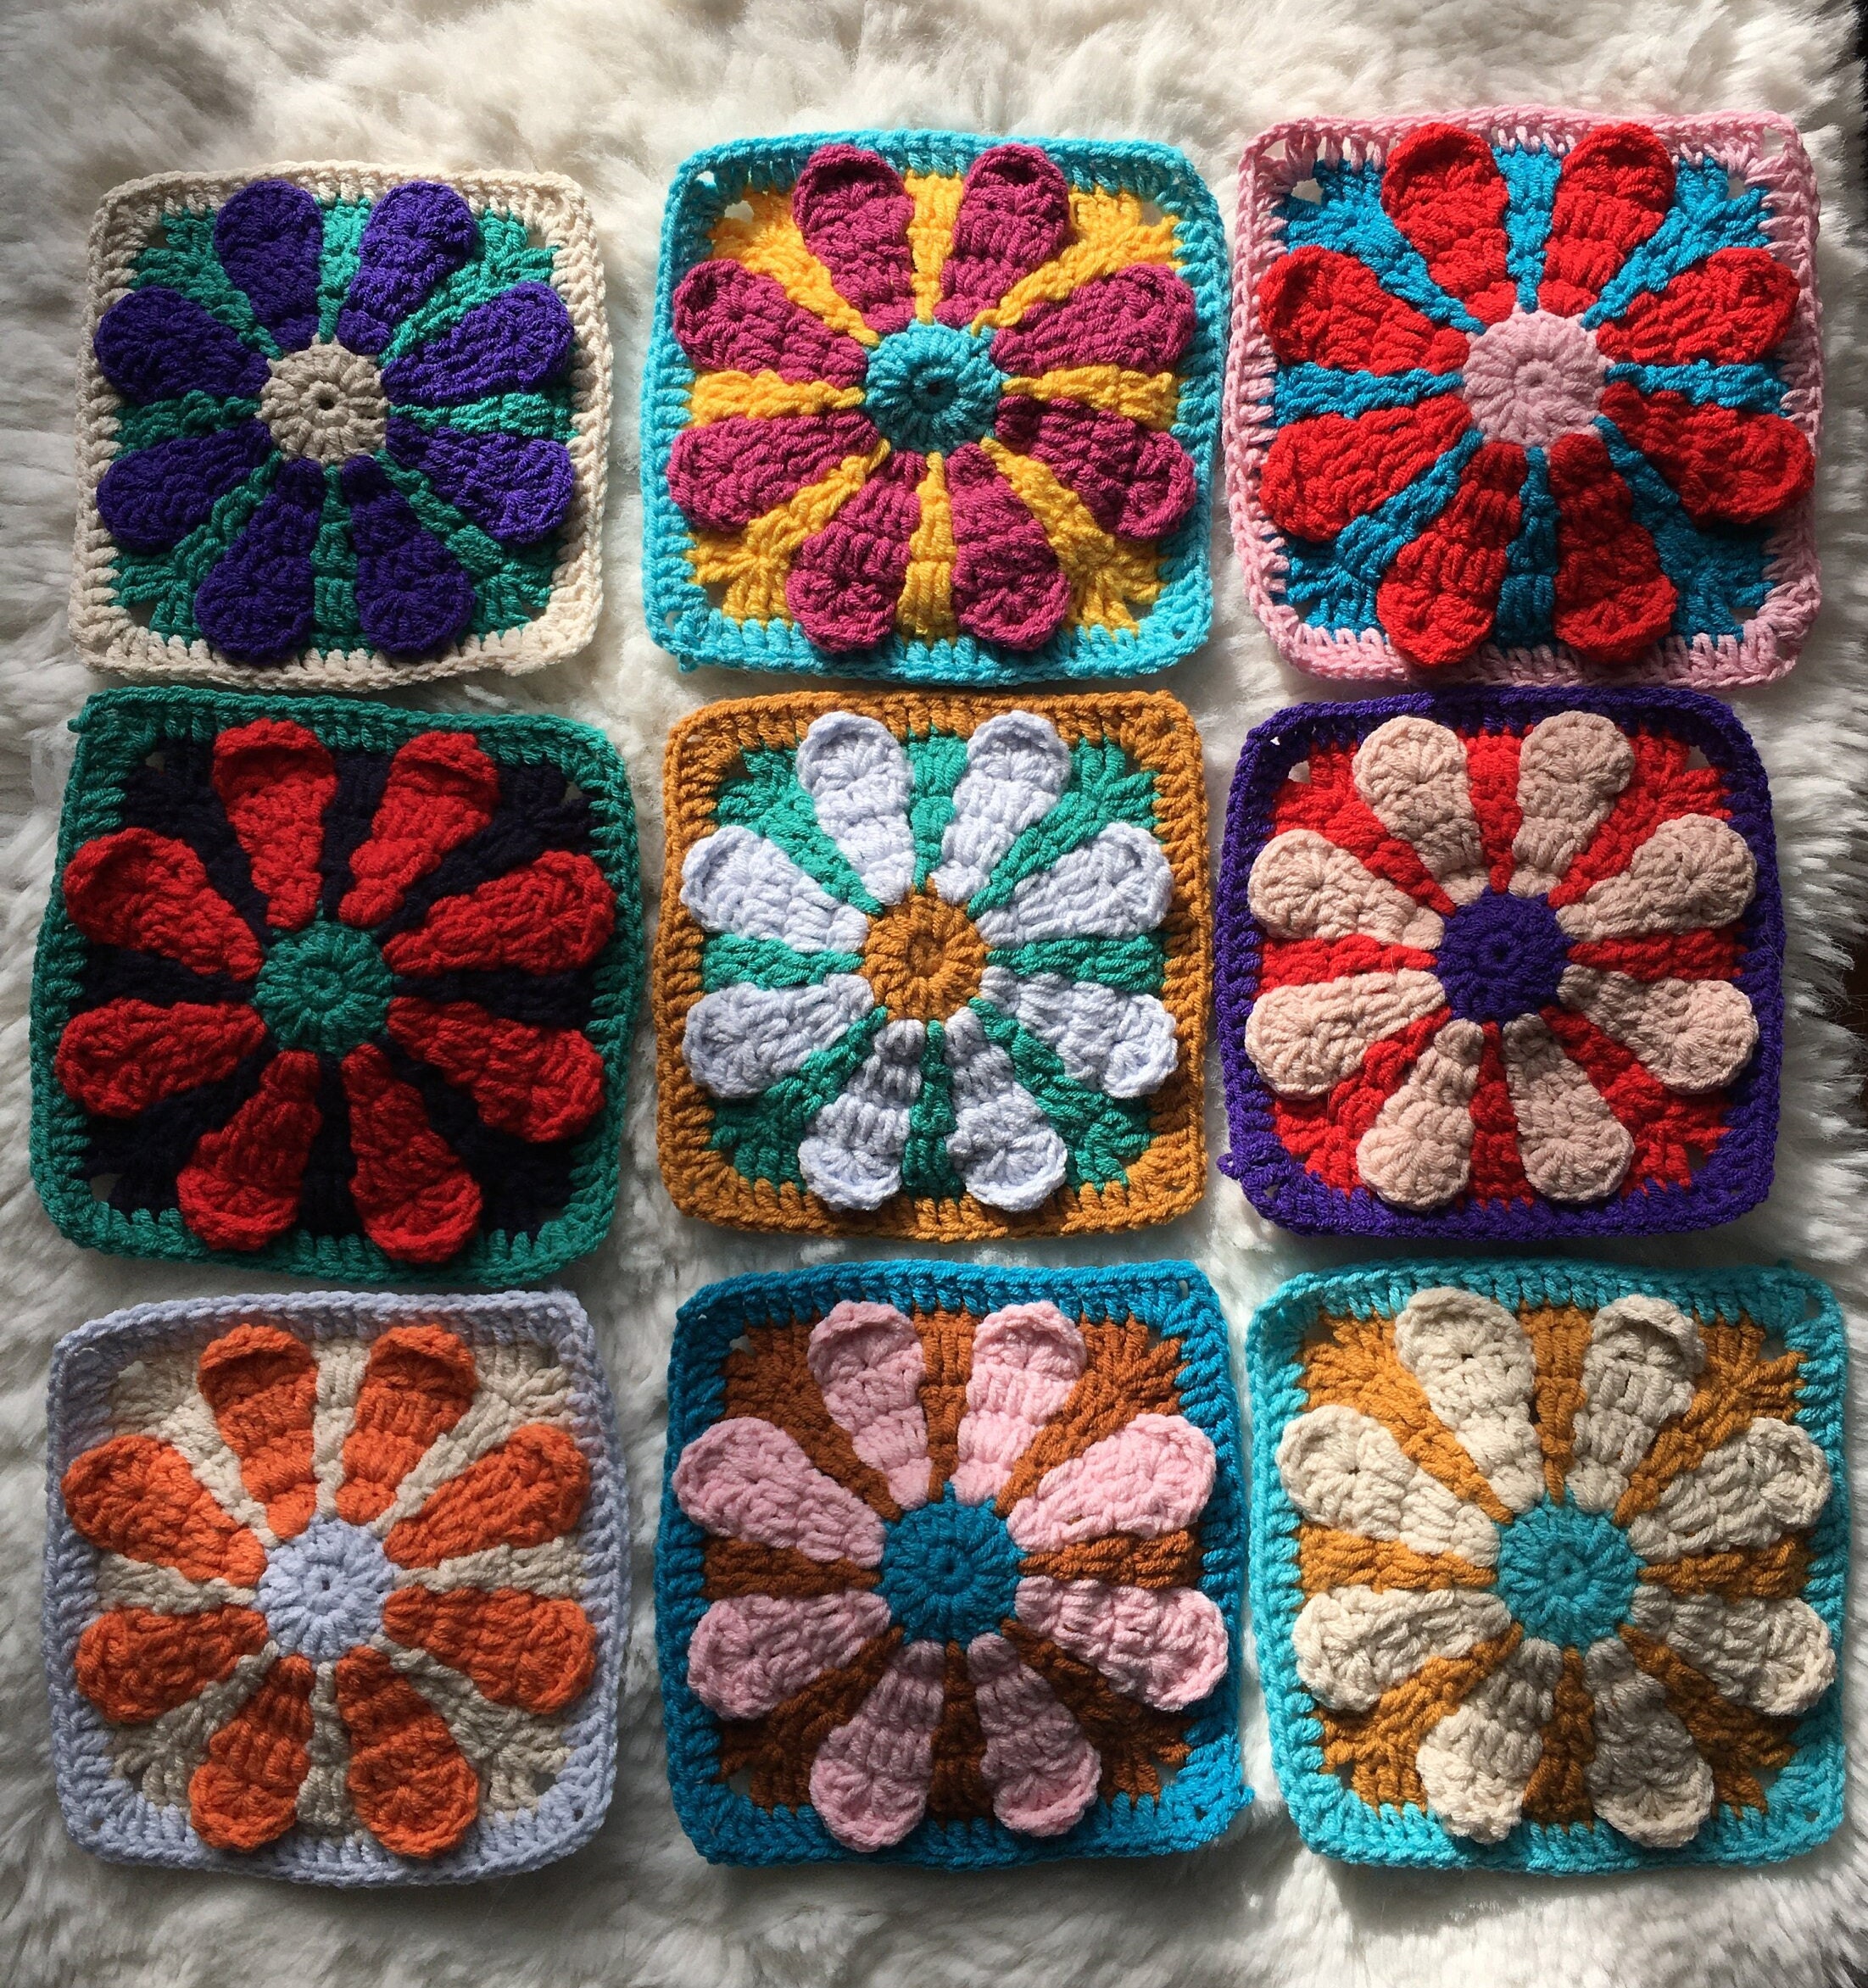 Handmade Crochet Granny Square Motif Ready to Shipping, Crocheted Motif  Set, Crocheted Granny Squares DIY Gift Set,crochet Craft Supply Kit 